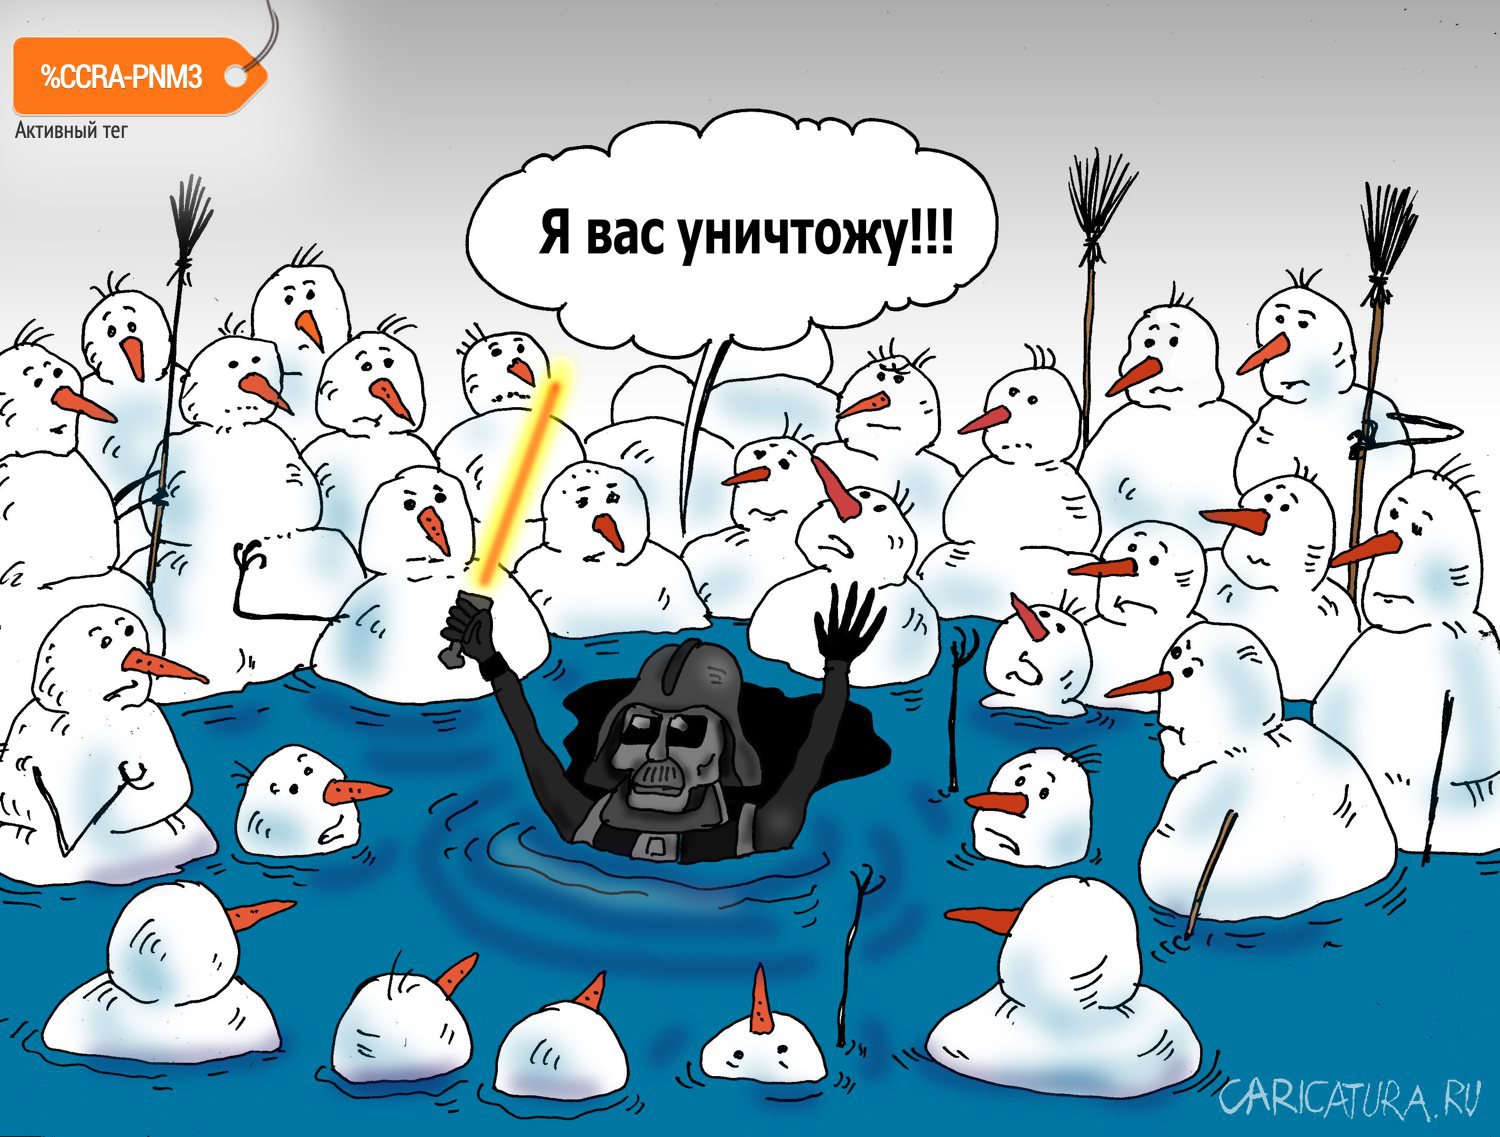 Карикатура "Конец императора", Валерий Тарасенко